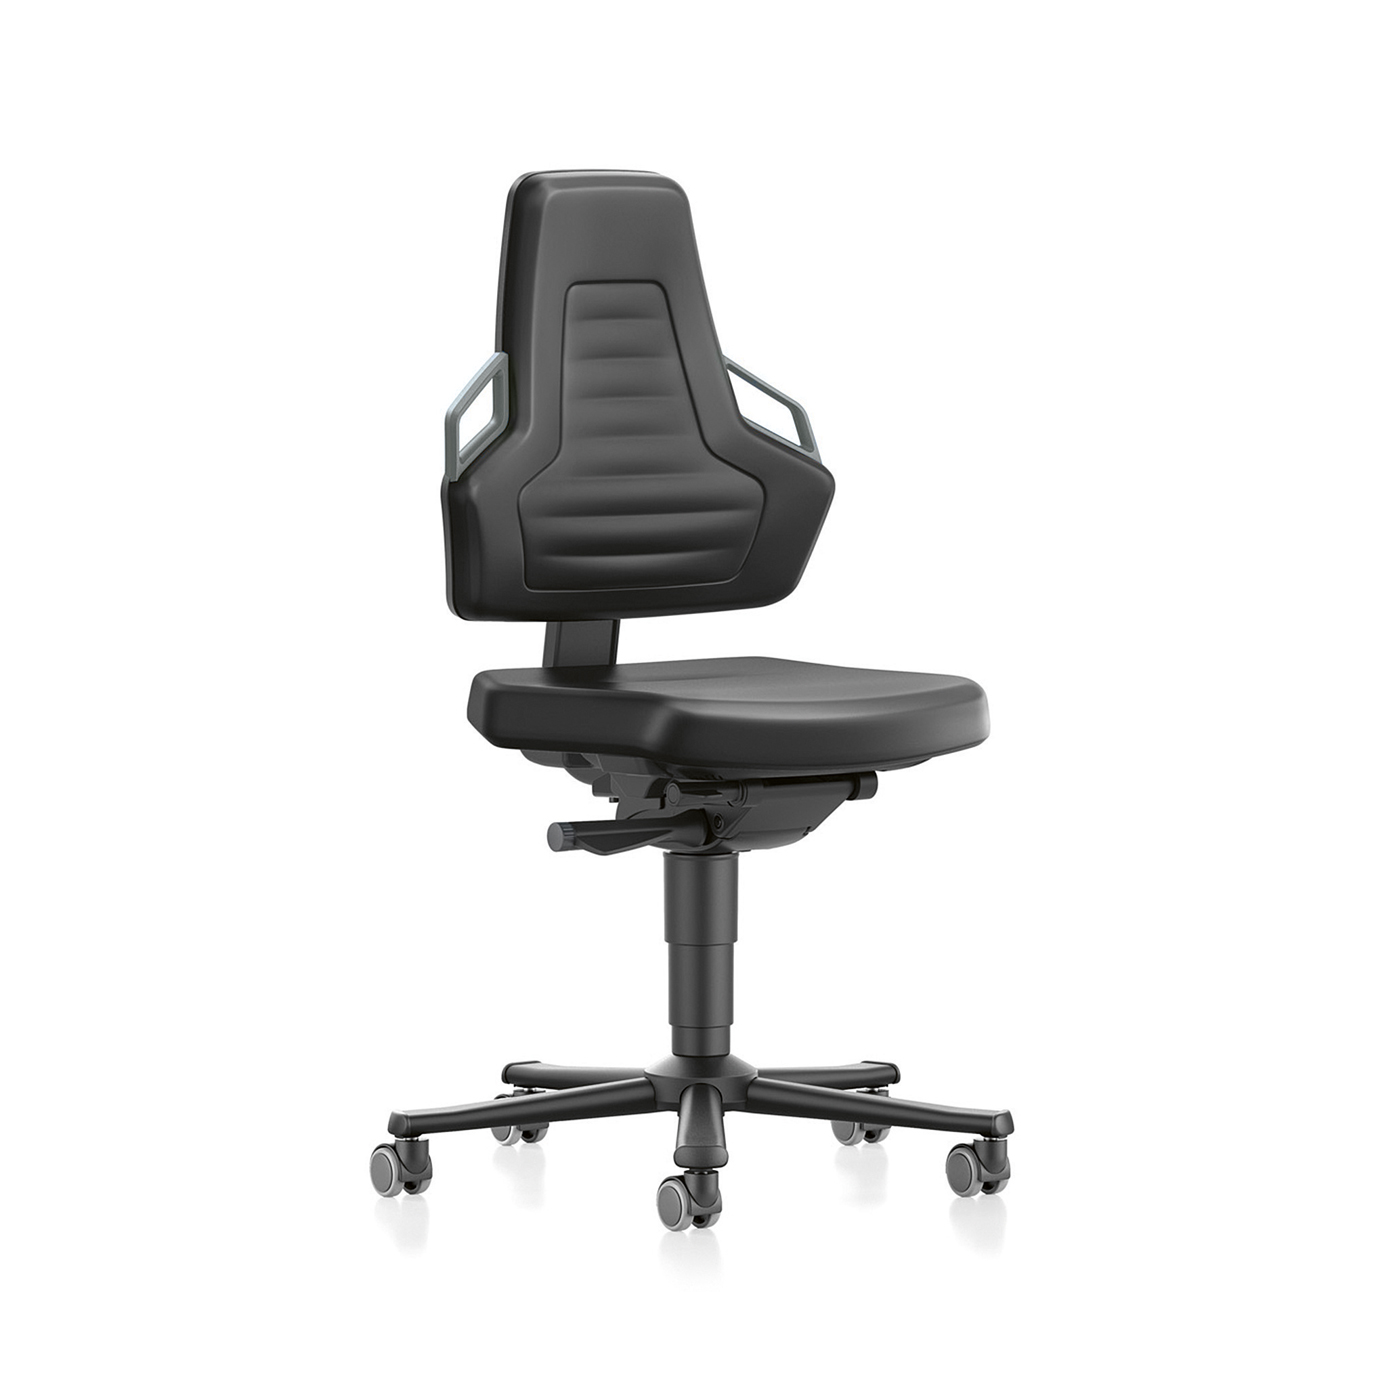 Nexxit 2 Swivel Chair, Artificial Leather Black/Anthrazite - 1 piece